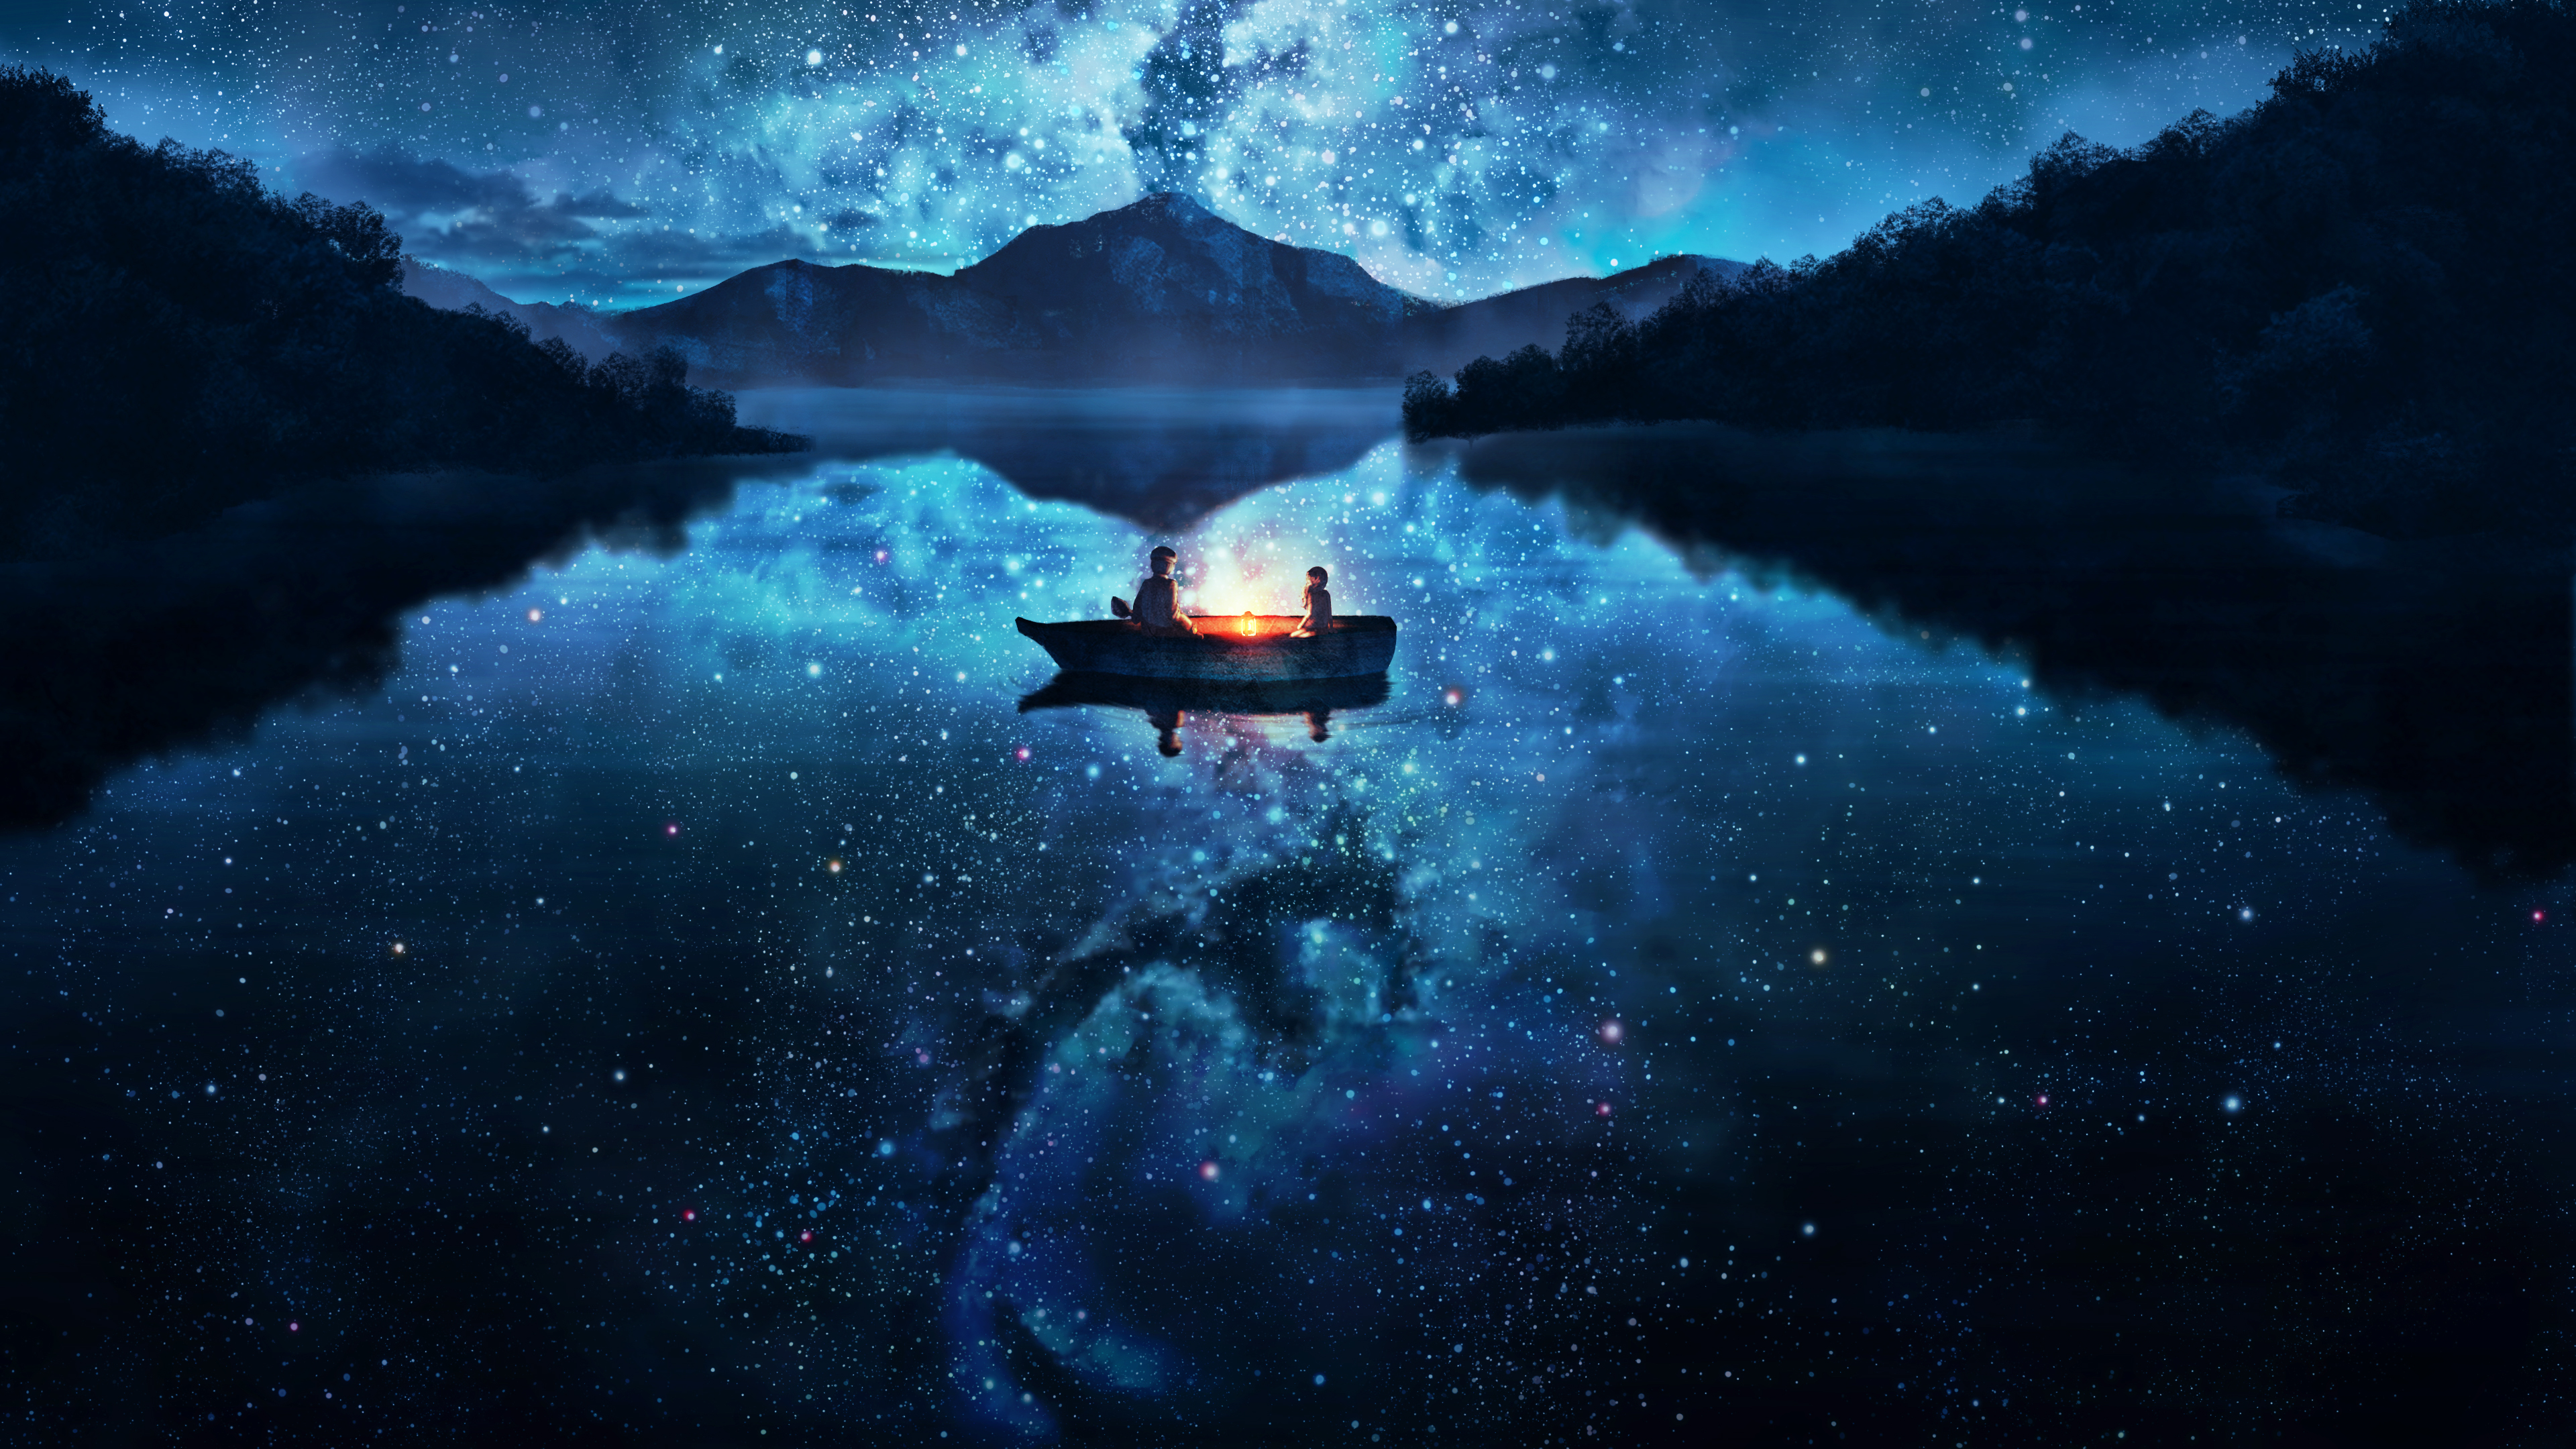 anime, night, lake, reflection, starry sky, boat, scenic